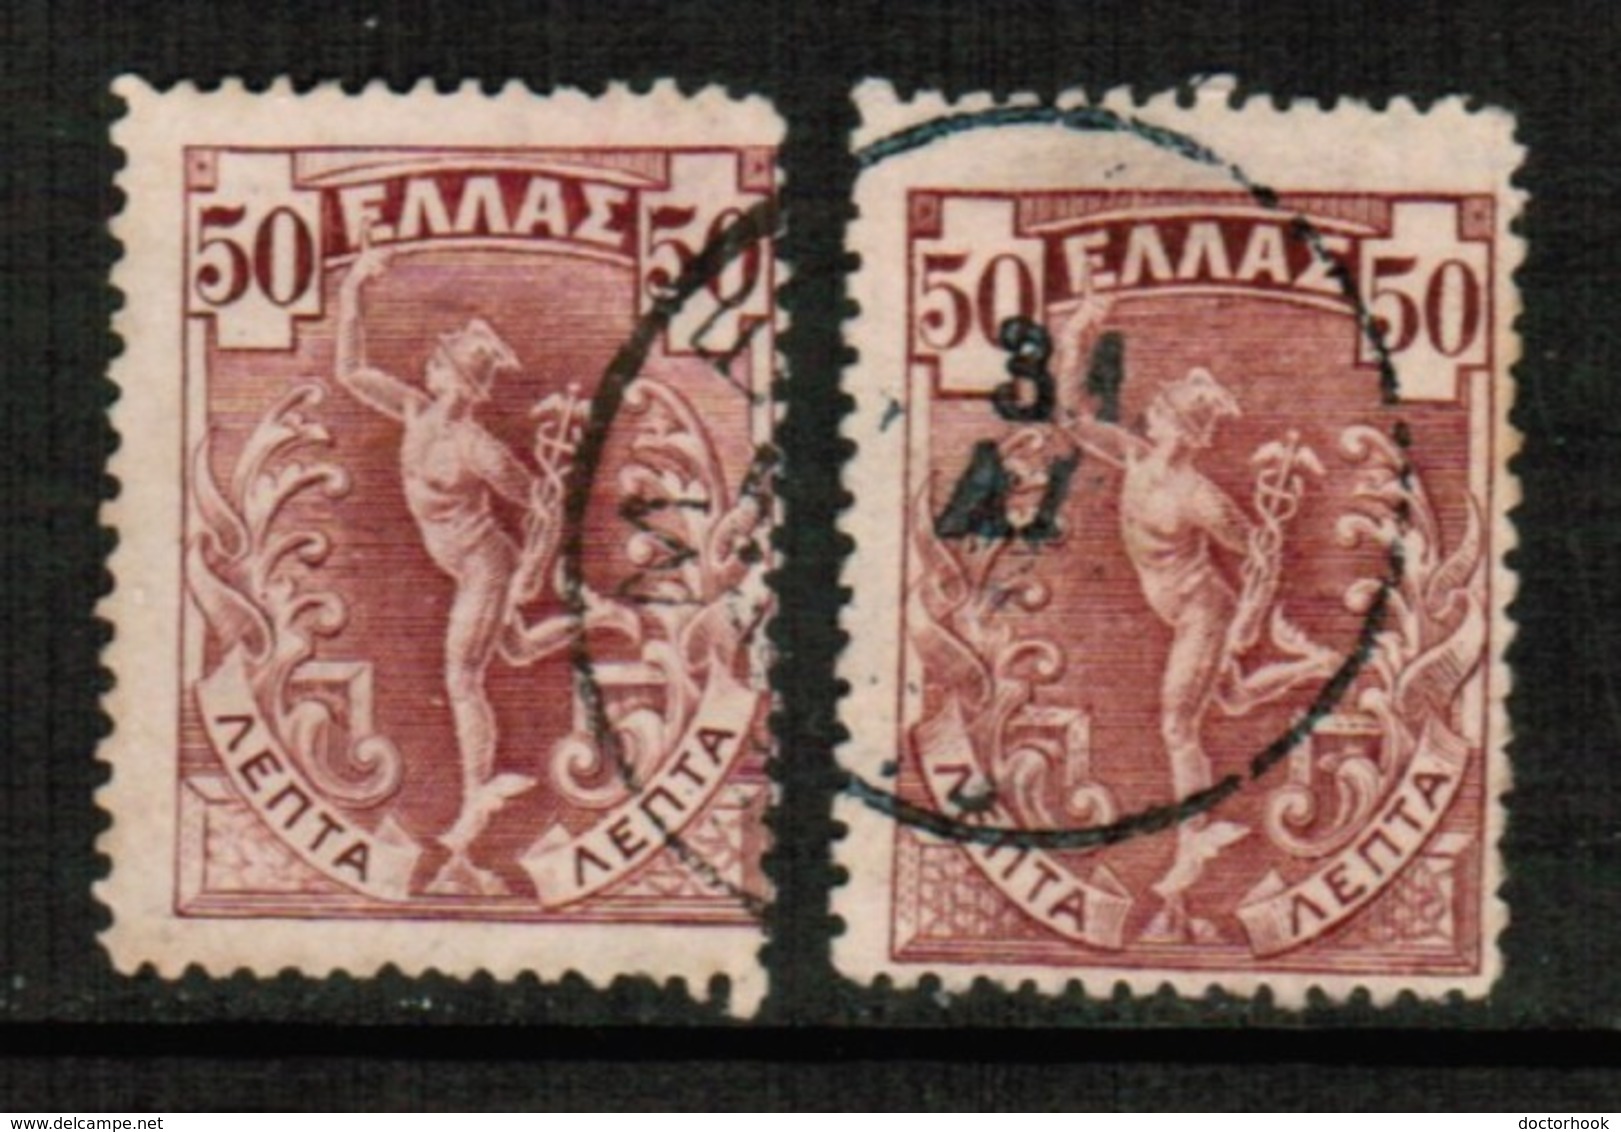 GREECE   Scott # 174 F-VF USED BOTH THICK & THIN PAPER VARIETIES (Stamp Scan # 563) - Gebruikt